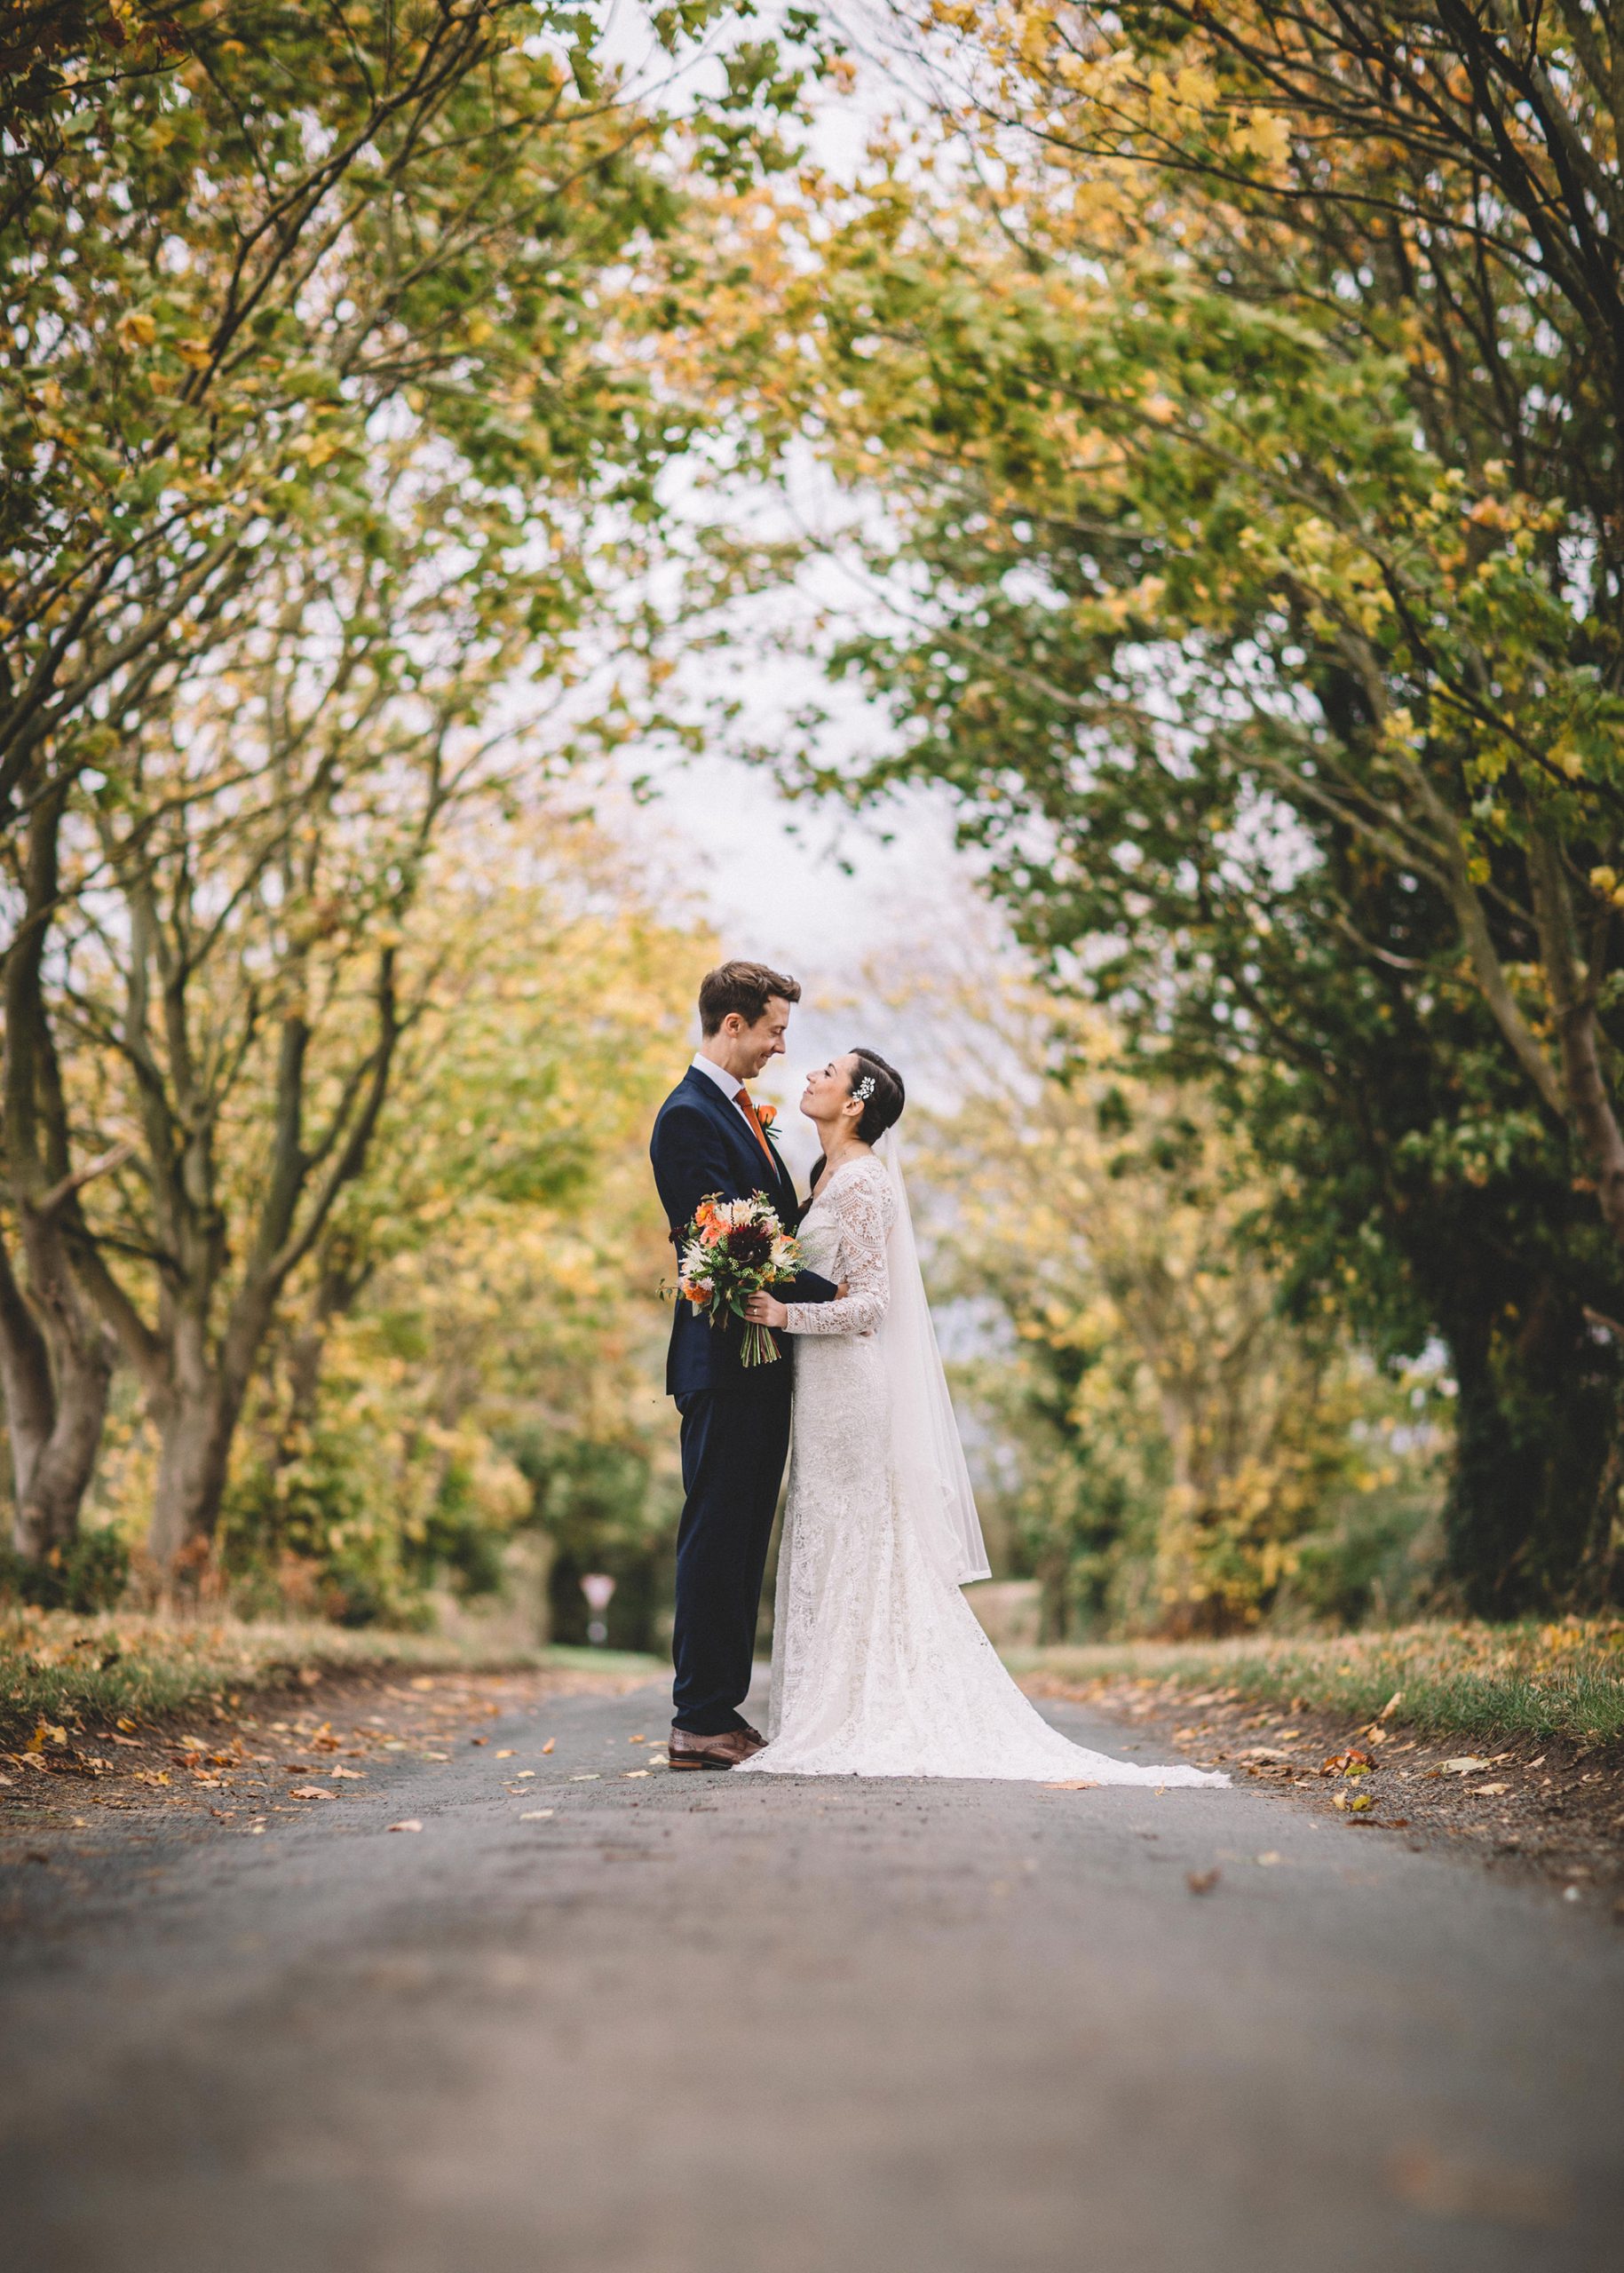 Rachel Andrew Rustic Warm Autumn Wedding Lumiere Photographic 027 scaled